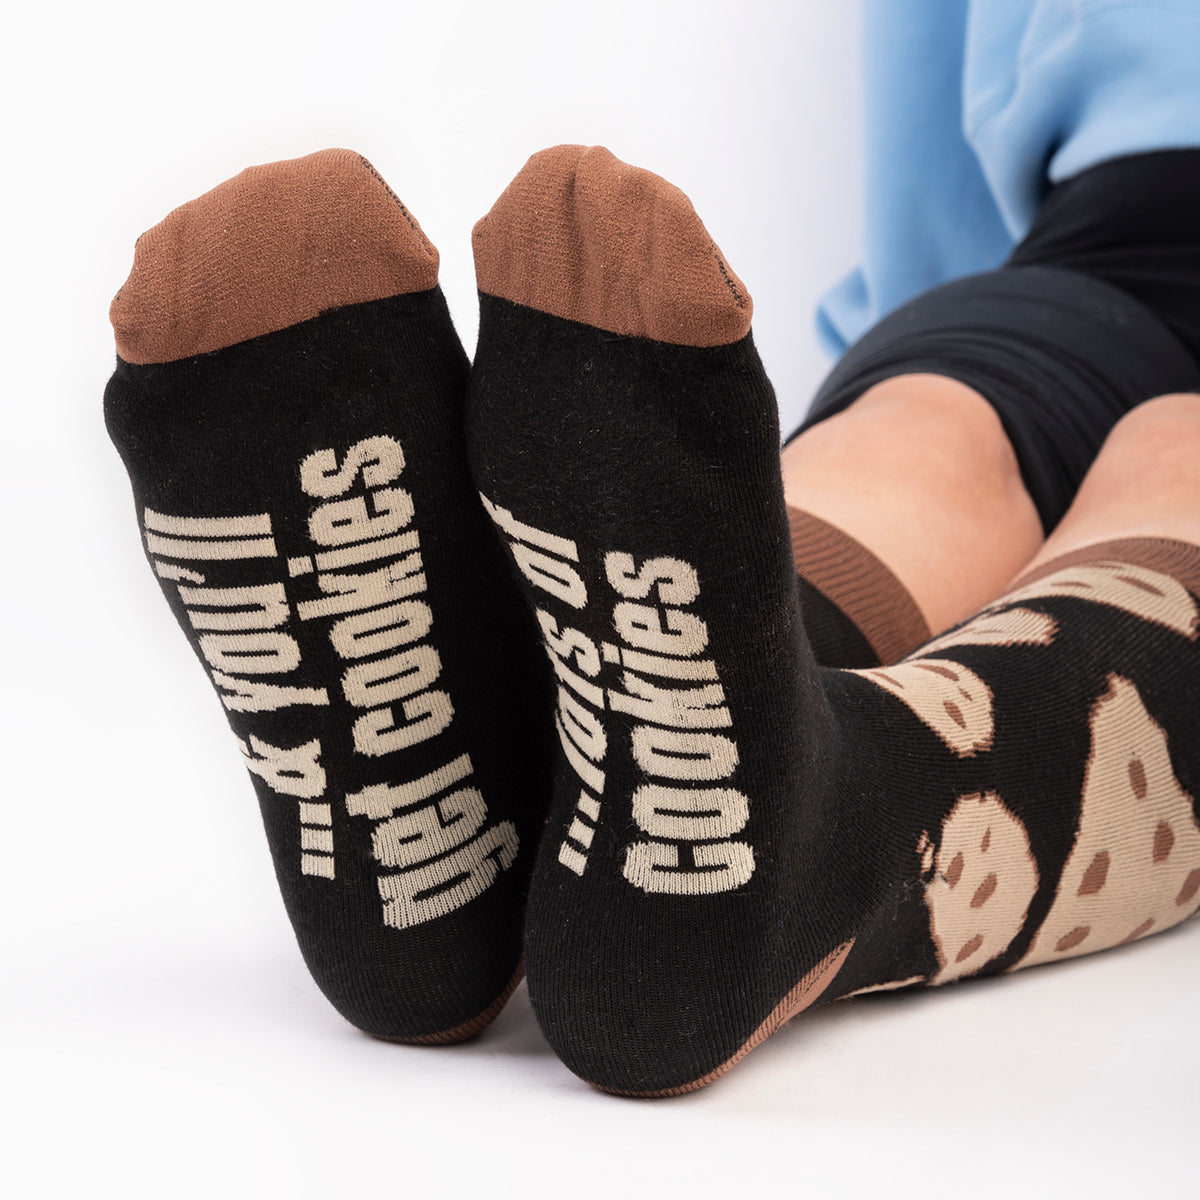 The Walking Dead You'll Get Cookies Socks-5